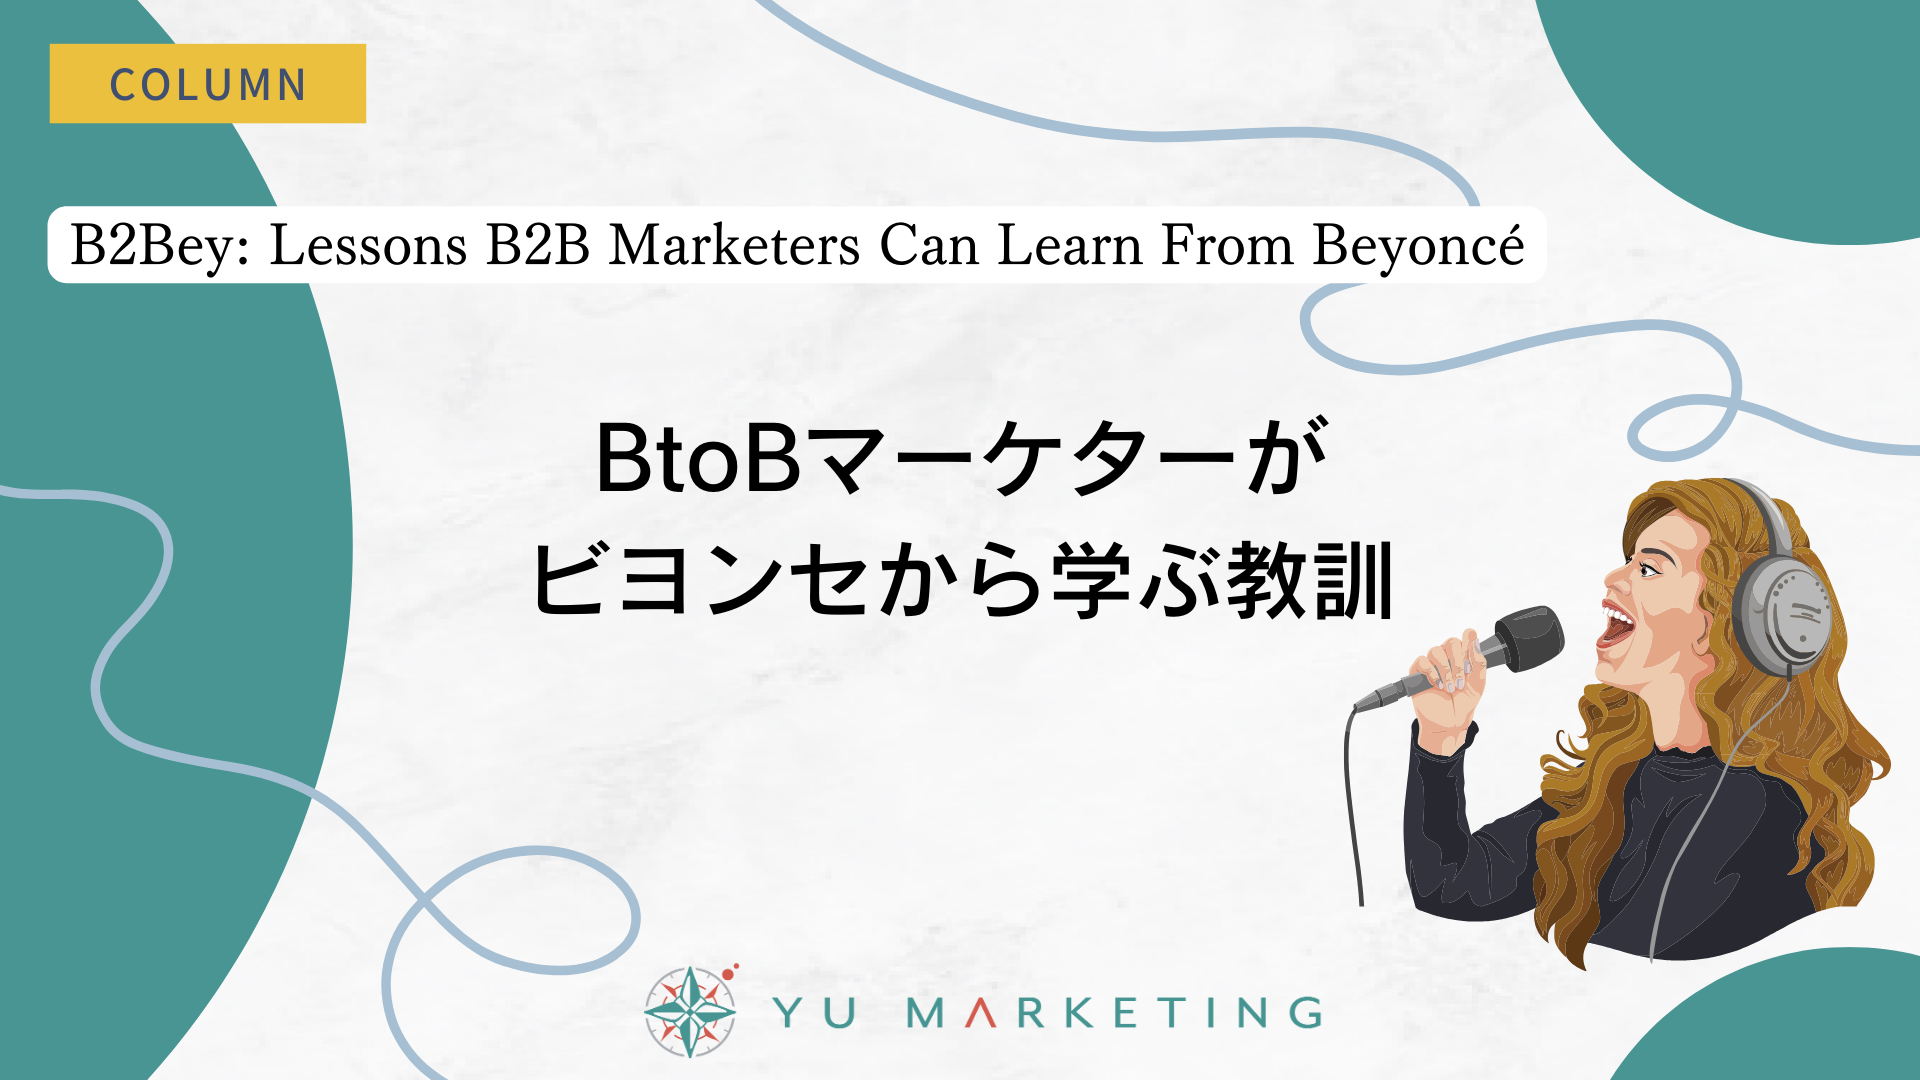 B2Bey: B2B マーケティング担当者がビヨンセから学べる教訓